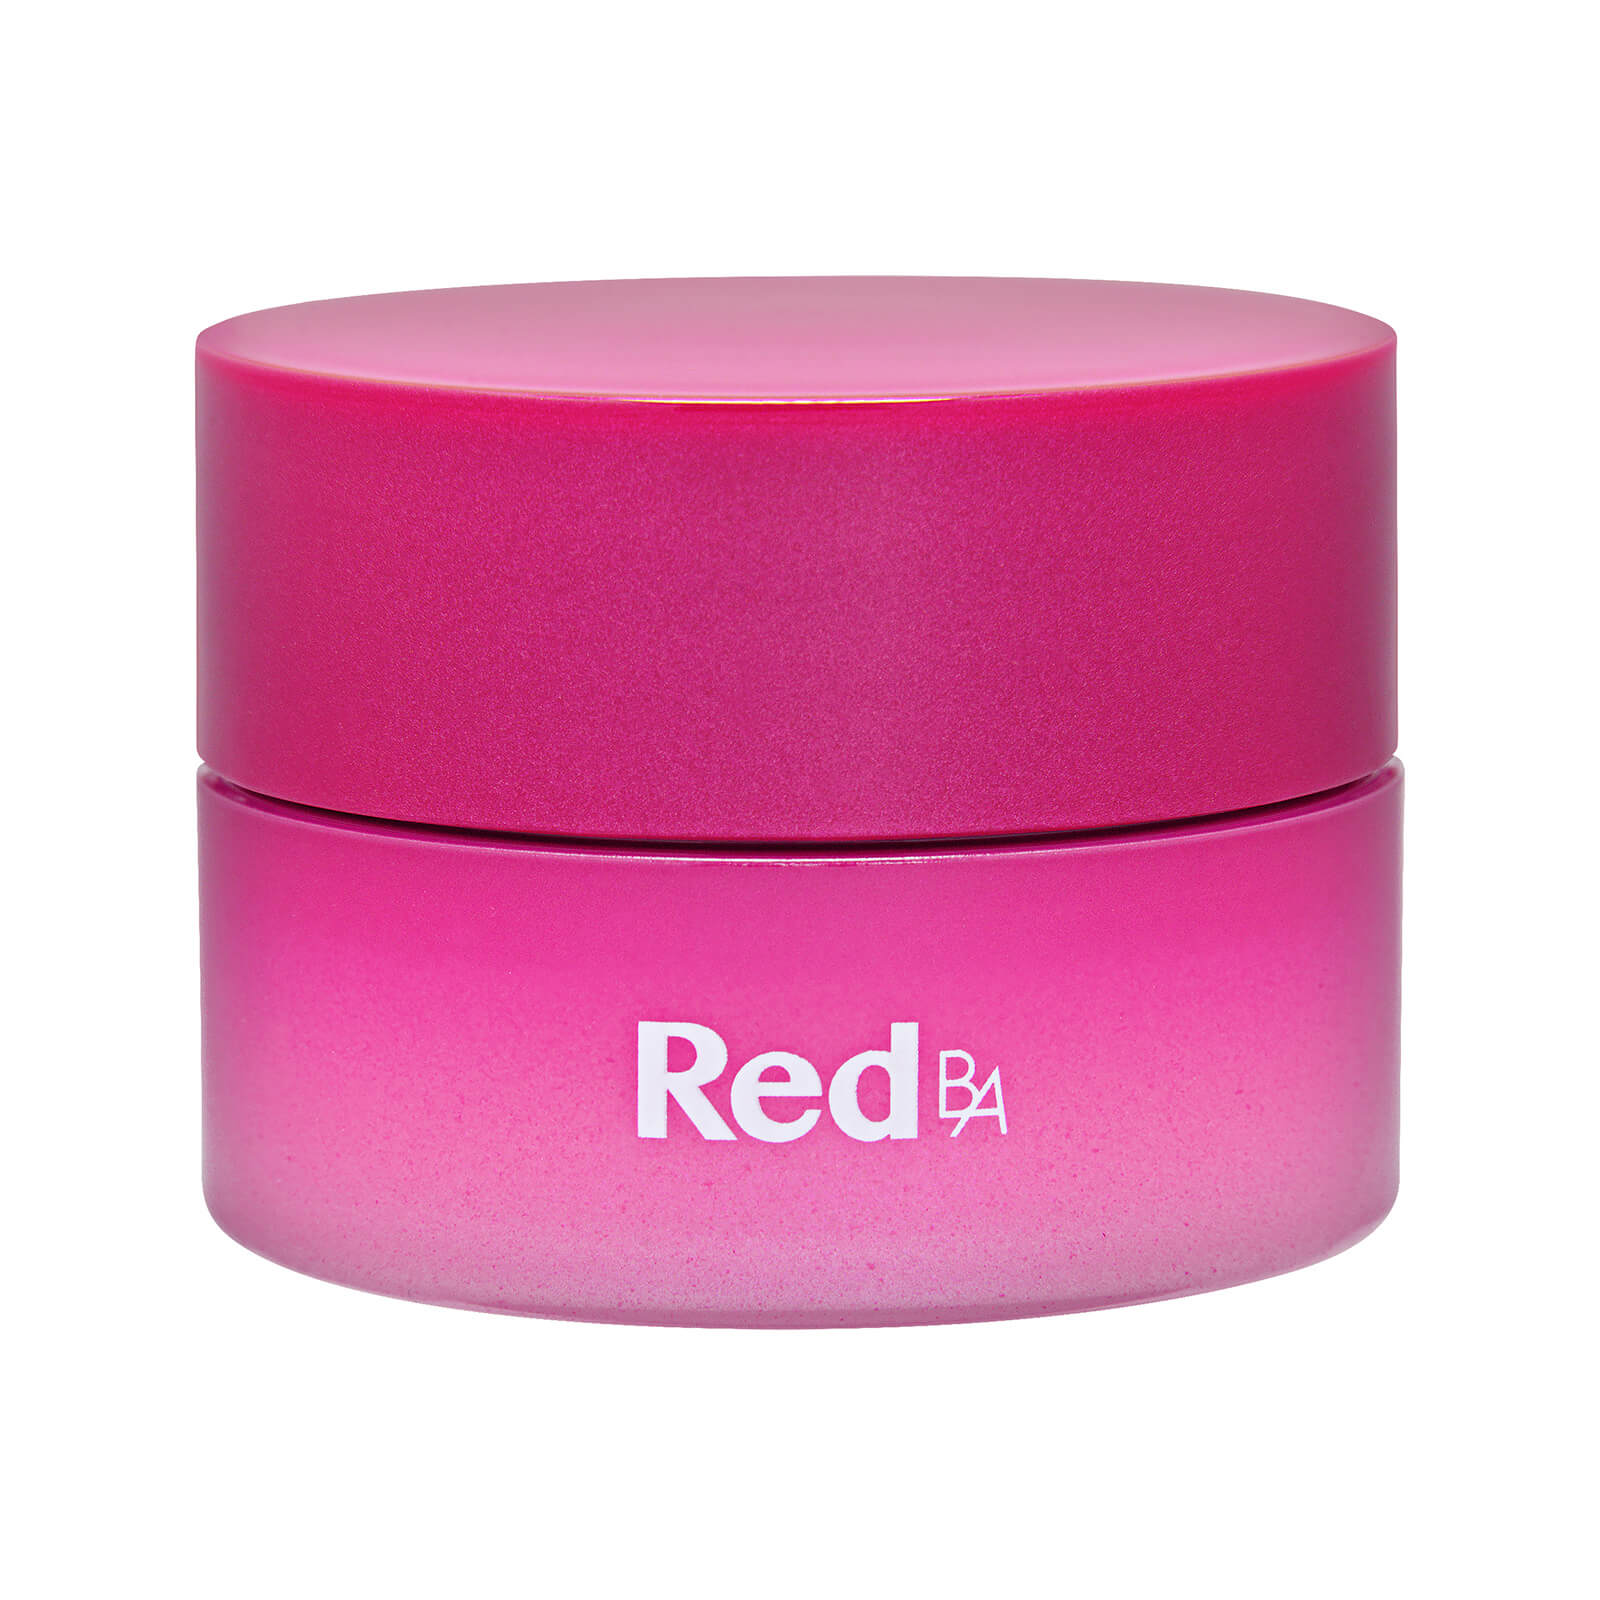 Red B.A Multi Concentrate Facial Cream